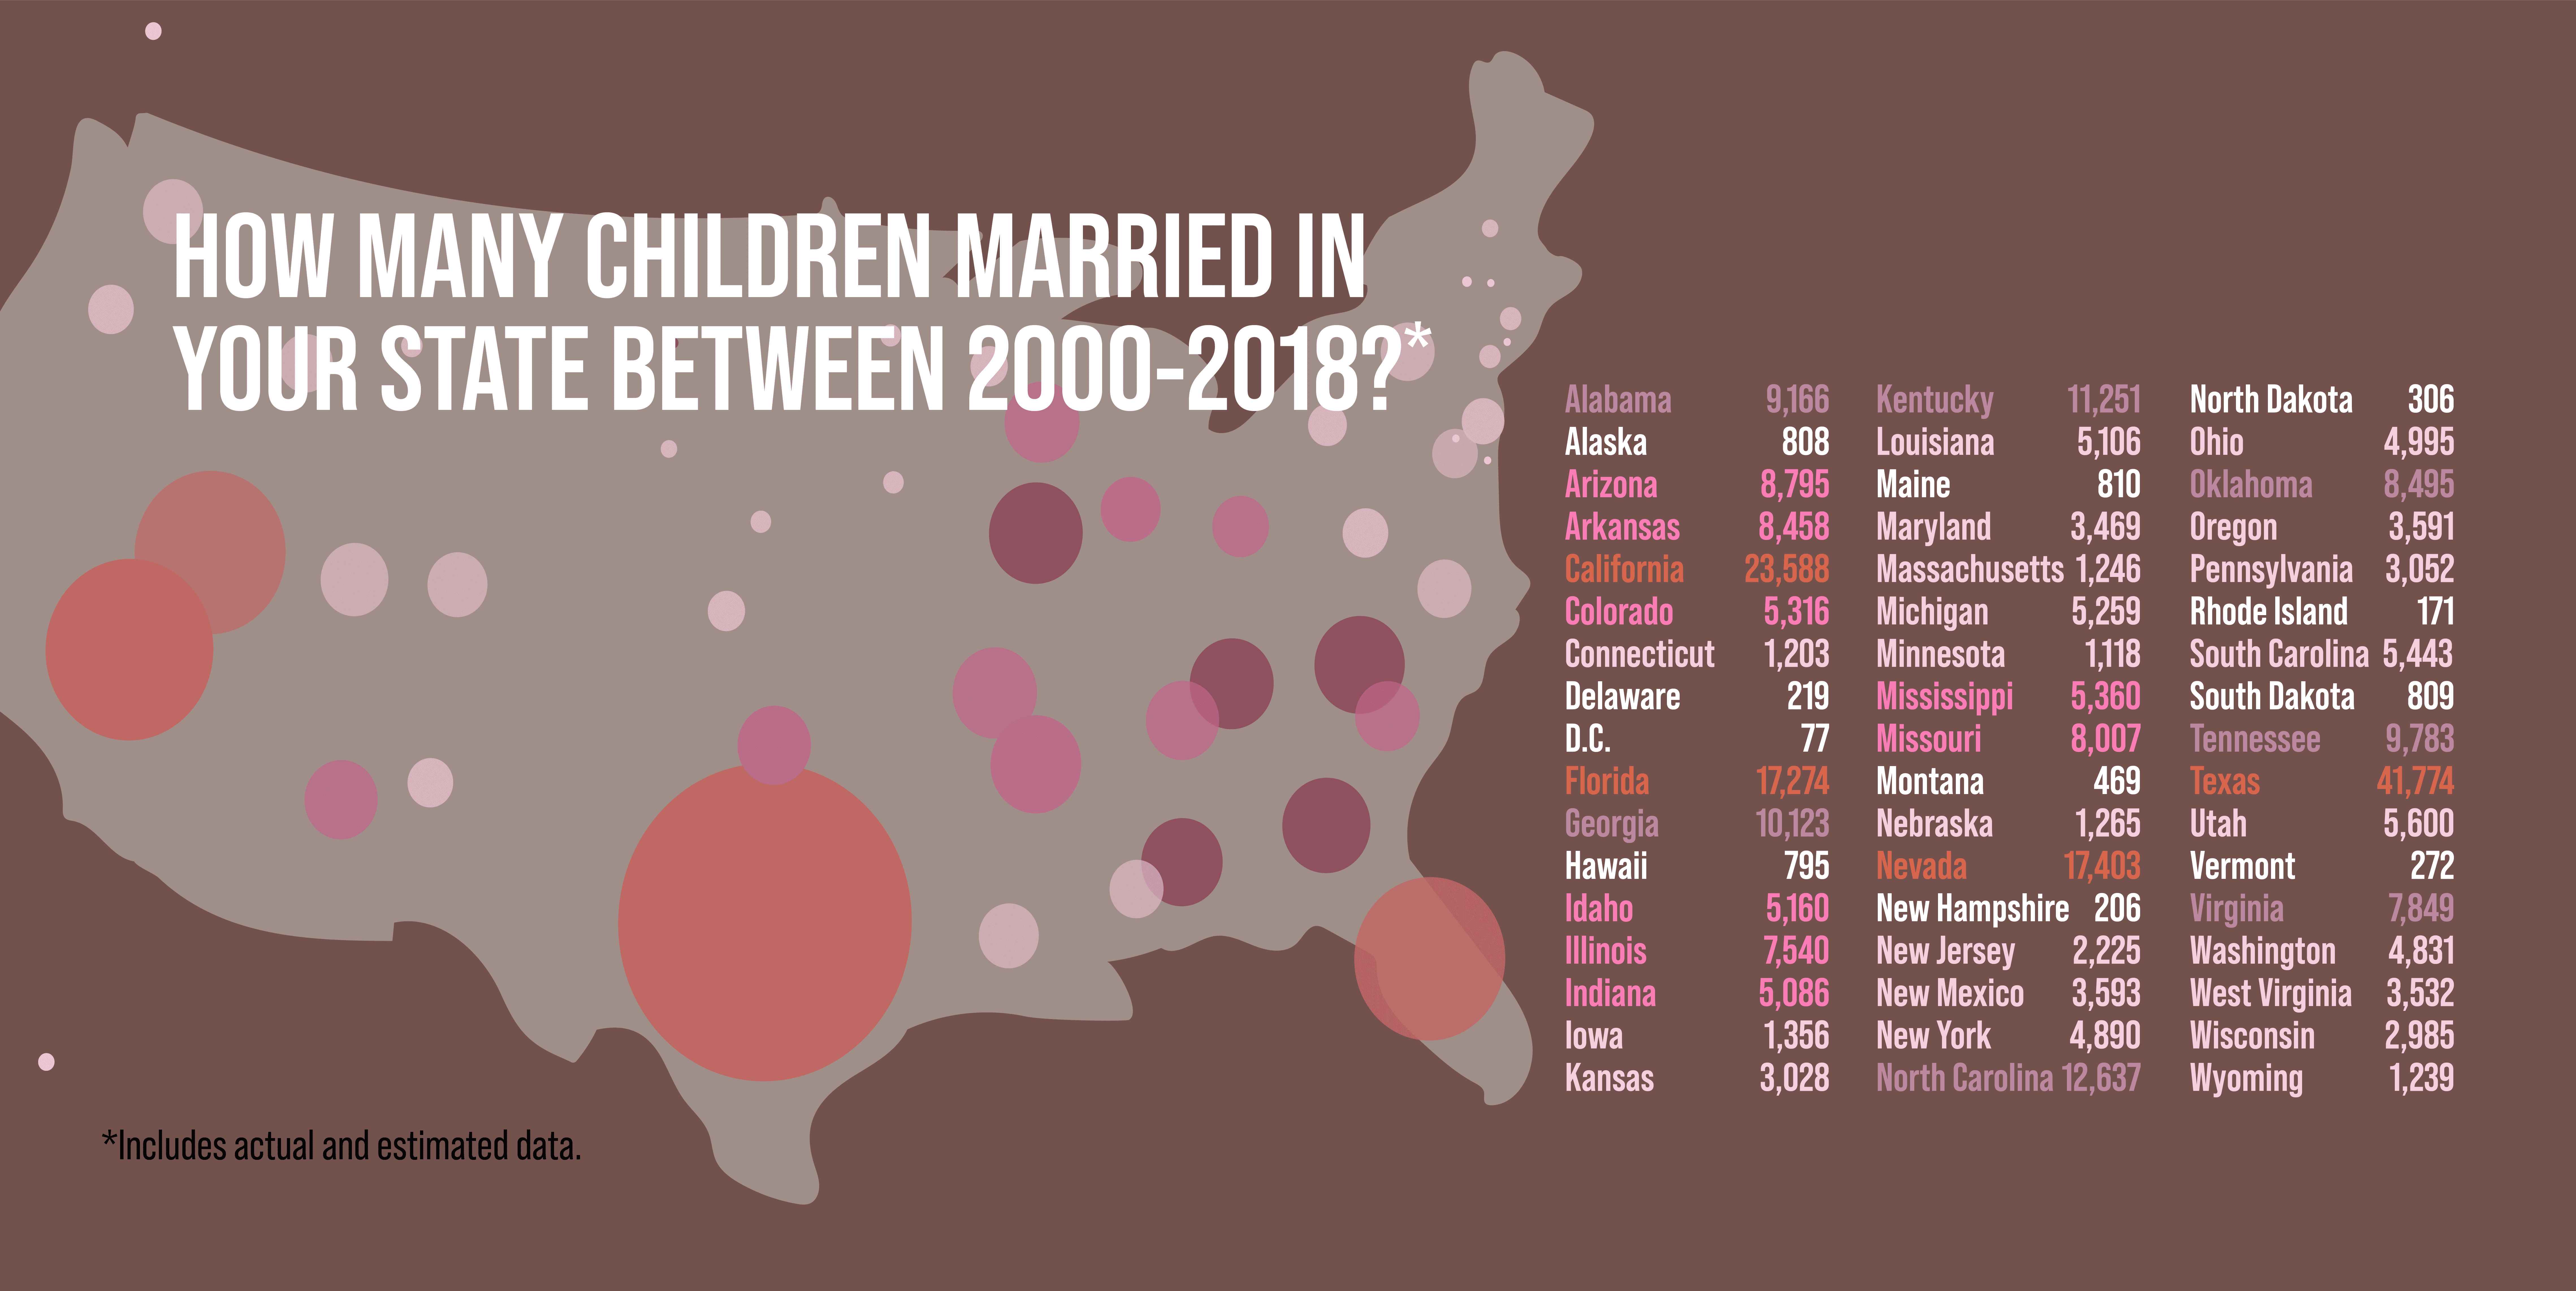 Graphic: How many children married in your state between 2000-2018?* *Includes actual and estimated data. Alabama: 9,166 Alaska: 808 Arizona: 8,795 Arkansas: 8,458 California: 23,588 Colorado: 5,316 Connecticut: 1,230 Delaware: 219 D.C.: 77 Florida: 17,274 Georgia: 10,123 Hawaii: 795 Idaho: 5,160 Illinois: 7,540 Indiana: 5,086 Iowa: 1,356 Kansas: 3,028 Kentucky: 11,251 Louisiana: 5,106 Maine: 810 Maryland: 3,469 Massachusetts: 1,246 Michigan: 5,259 Minnesota: 1,118 Mississippi: 5,360 Missouri: 8,007 Montana: 469 Nebraska: 1,265 Nevada: 17,403 New Hampshire: 206 New Jersey: 2,225 New Mexico: 3,593 New York: 4,890 North Carolina: 12,637 North Dakota: 306 Ohio: 4,995 Oklahoma: 8,495 Oregon: 3,591 Pennsylvania: 3,052 Rhode Island: 171 South Carolina: 5,443 South Dakota: 809 Tennessee: 9,783 Texas: 41,774 Utah: 5,600 Vermont: 272 Virginia: 7,849 Washington: 4,831 West Virginia: 3,532 Wisconsin: 2,985 Wyoming: 1,239